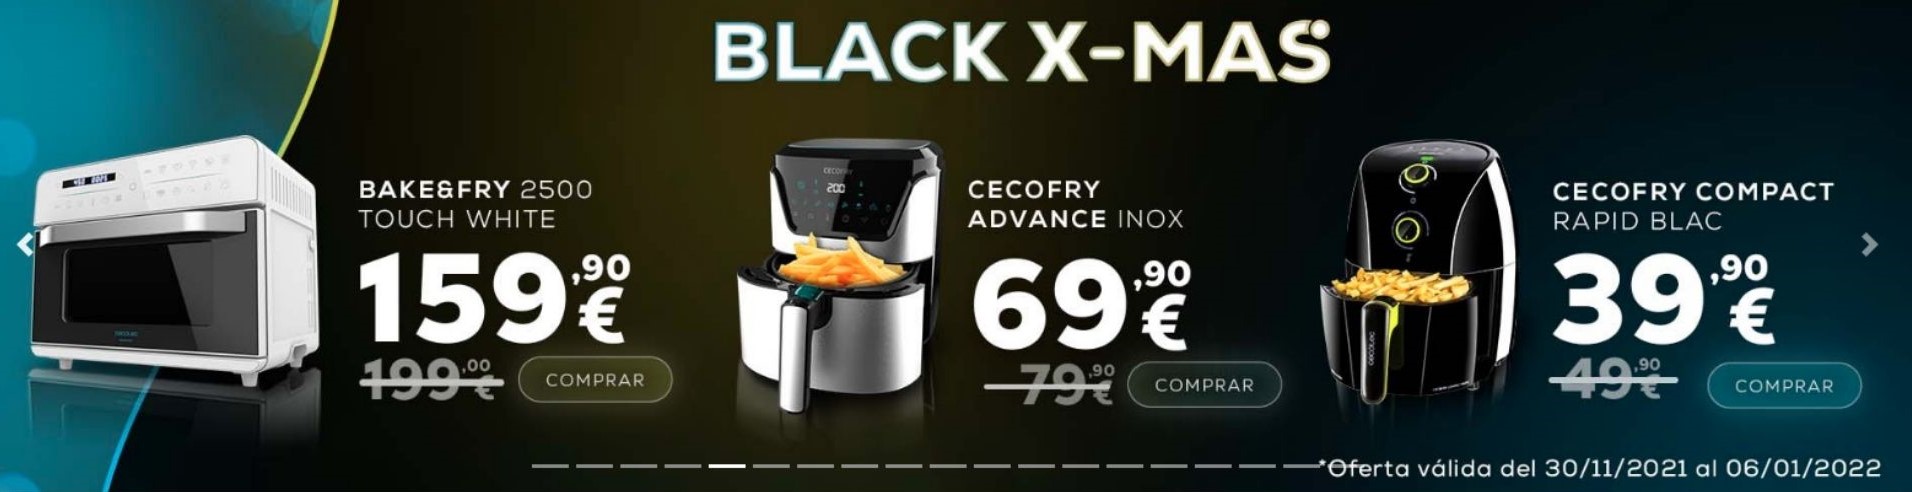 BLACK X-MAS CECOTEC